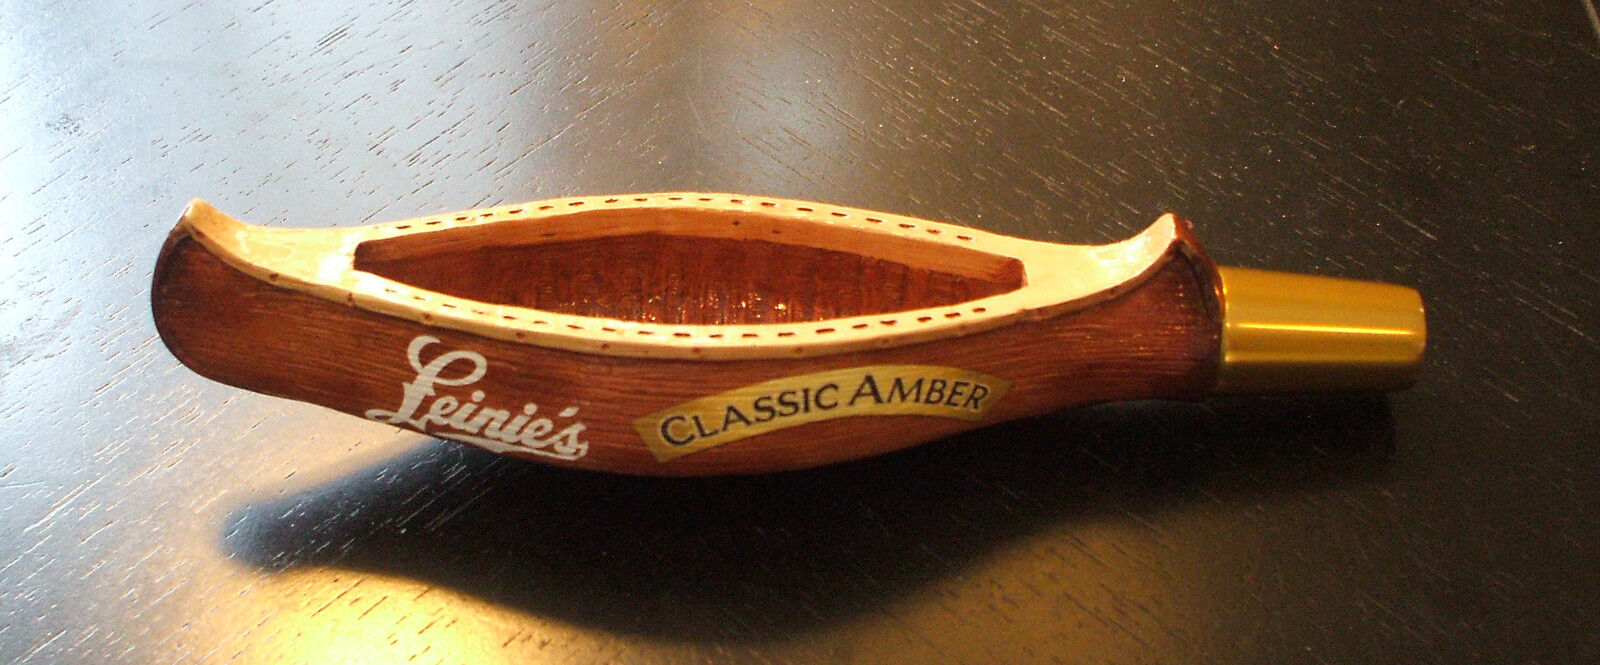 LEINENKUGELS Canoe Shaped Beer Tap Handle - Classic Amber logo - NEW